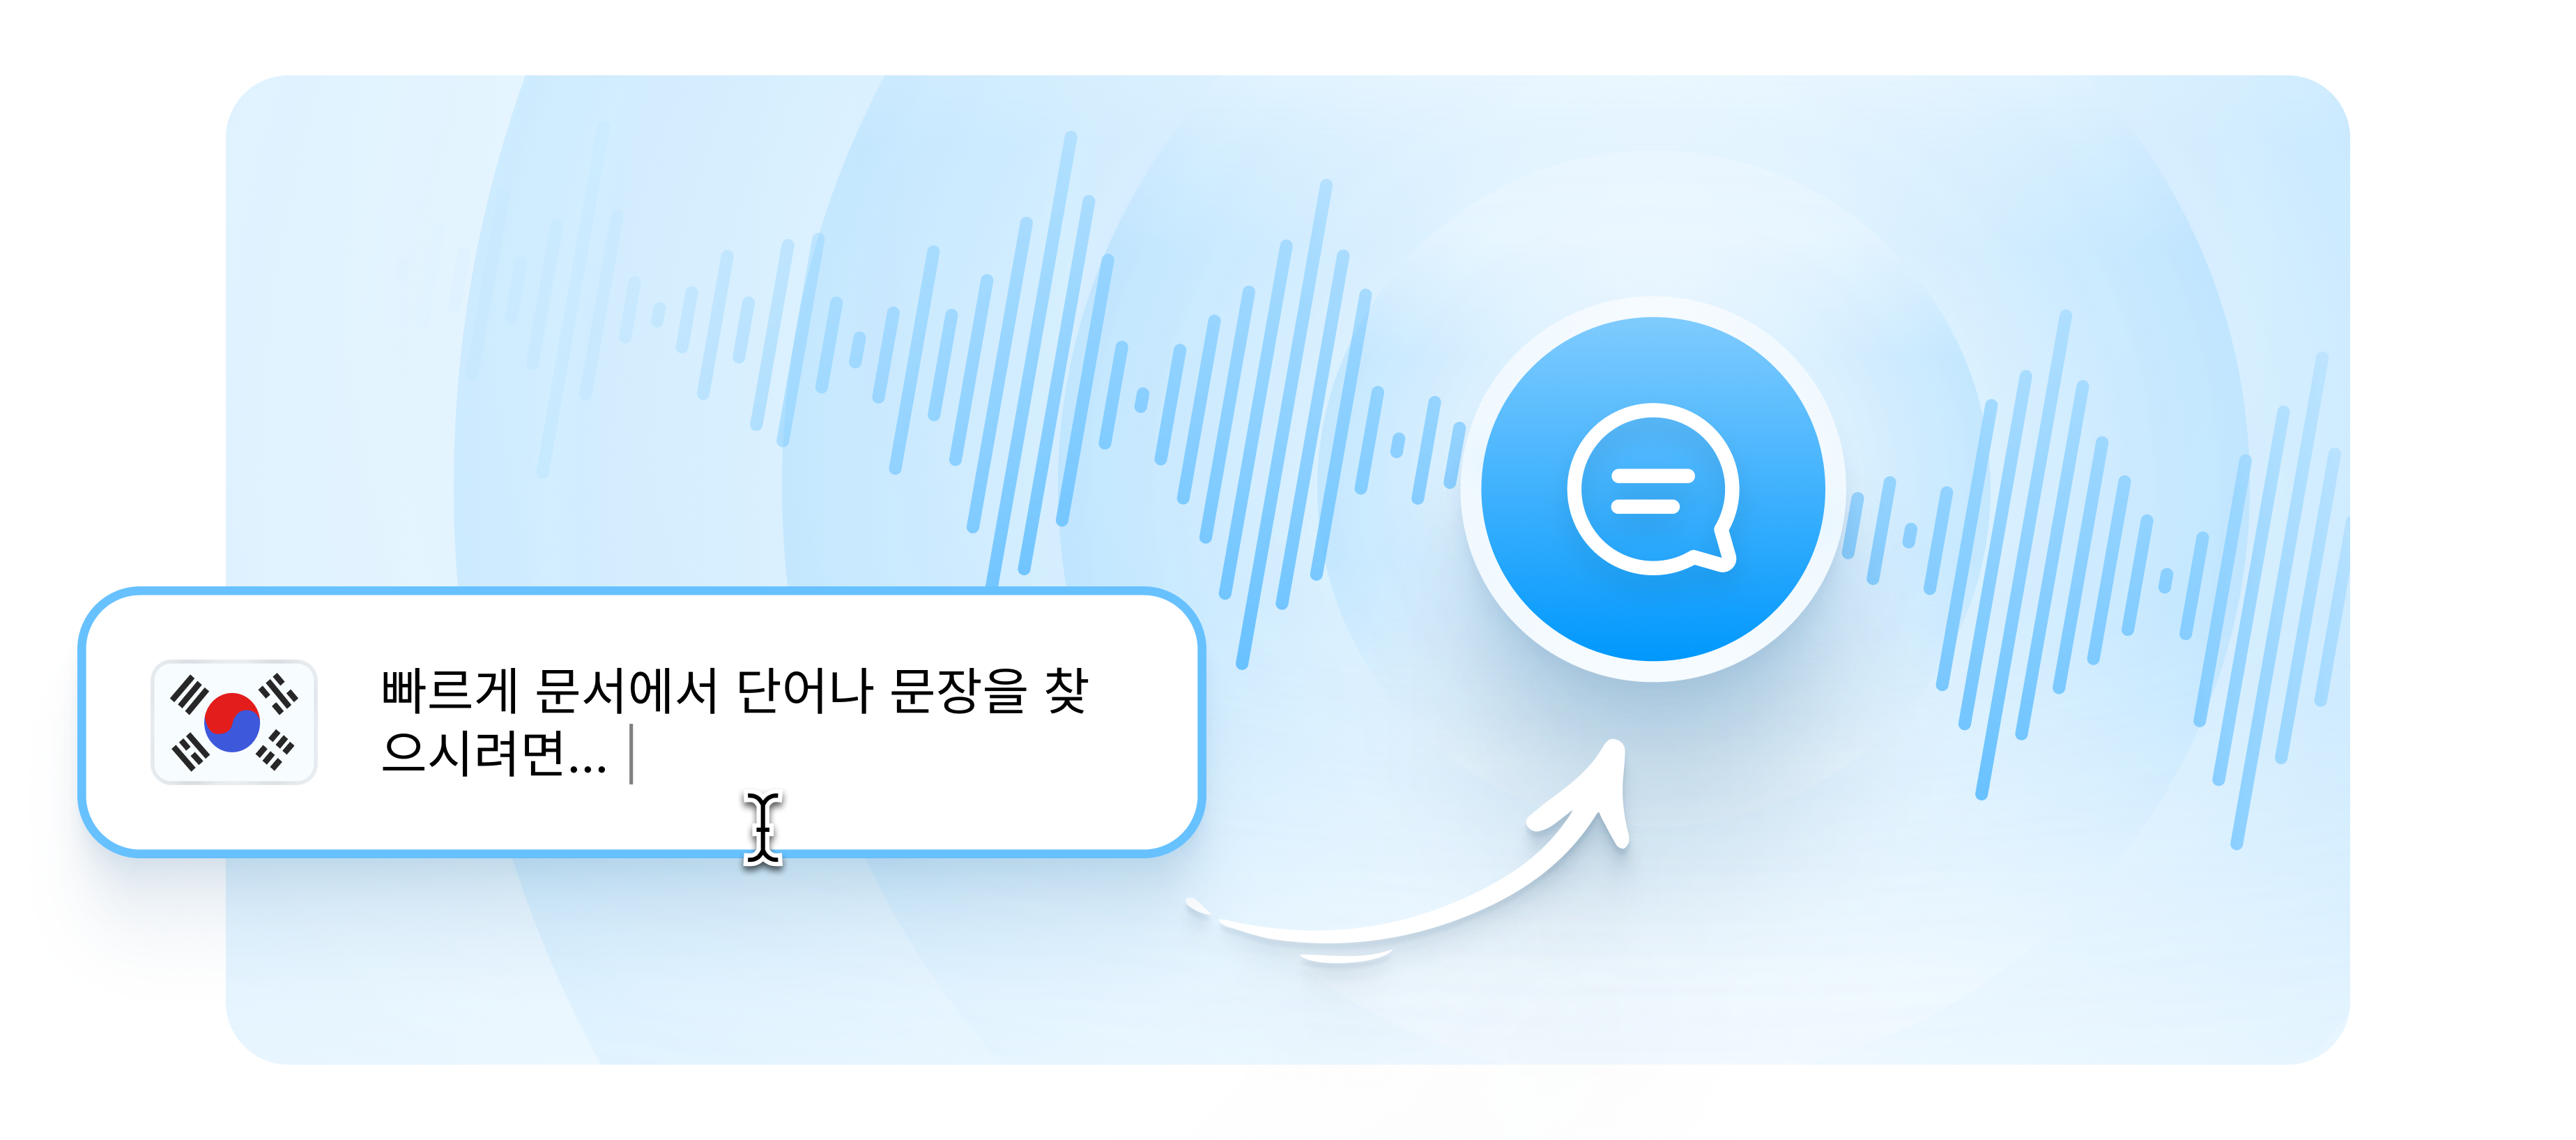 text to speech korean voice